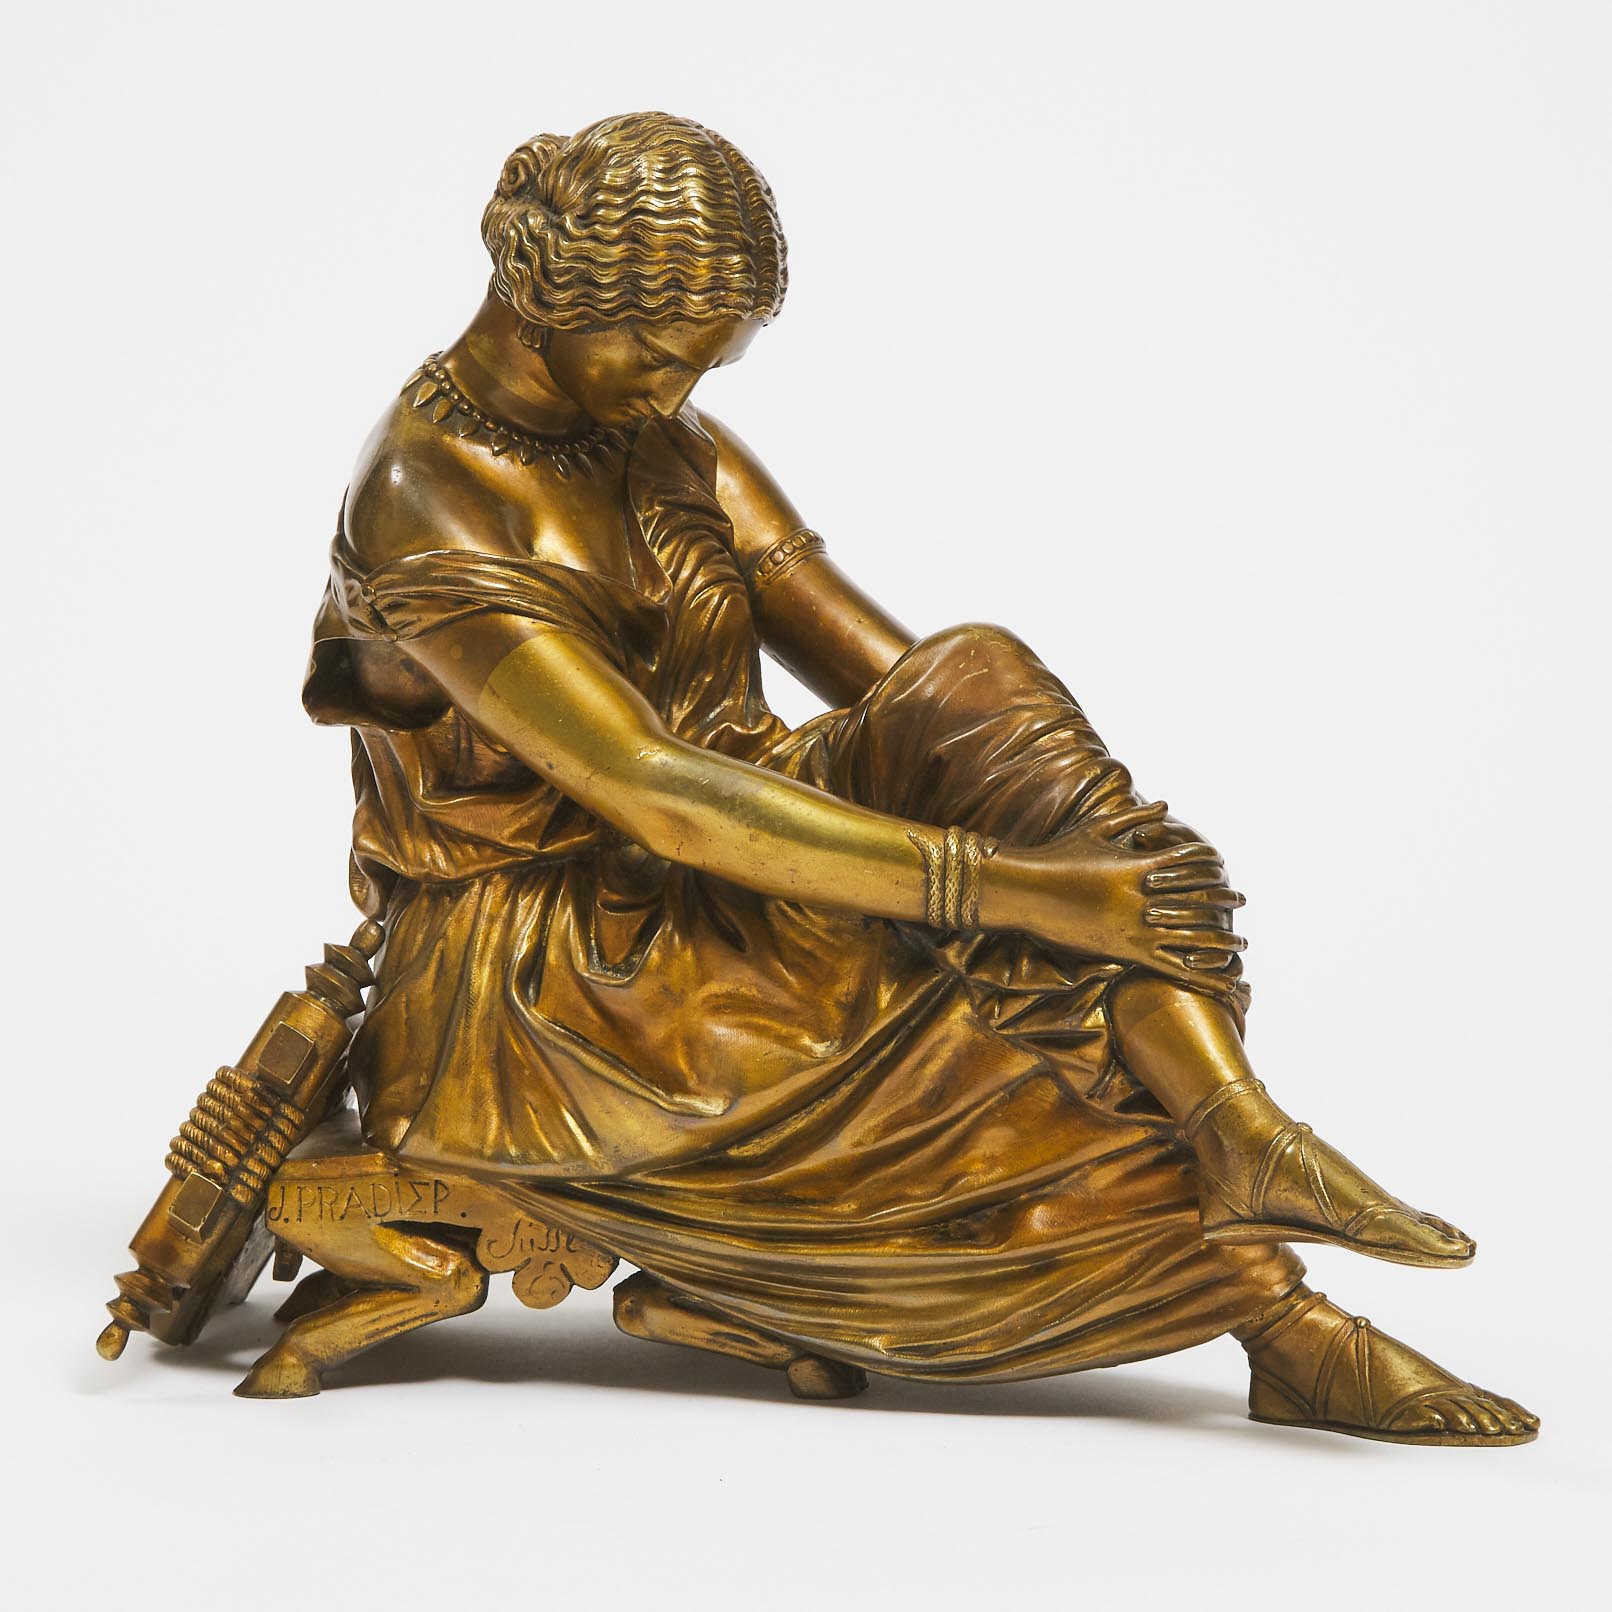 French School Gilt Bronze Seated Figure of Sappho, 19th century